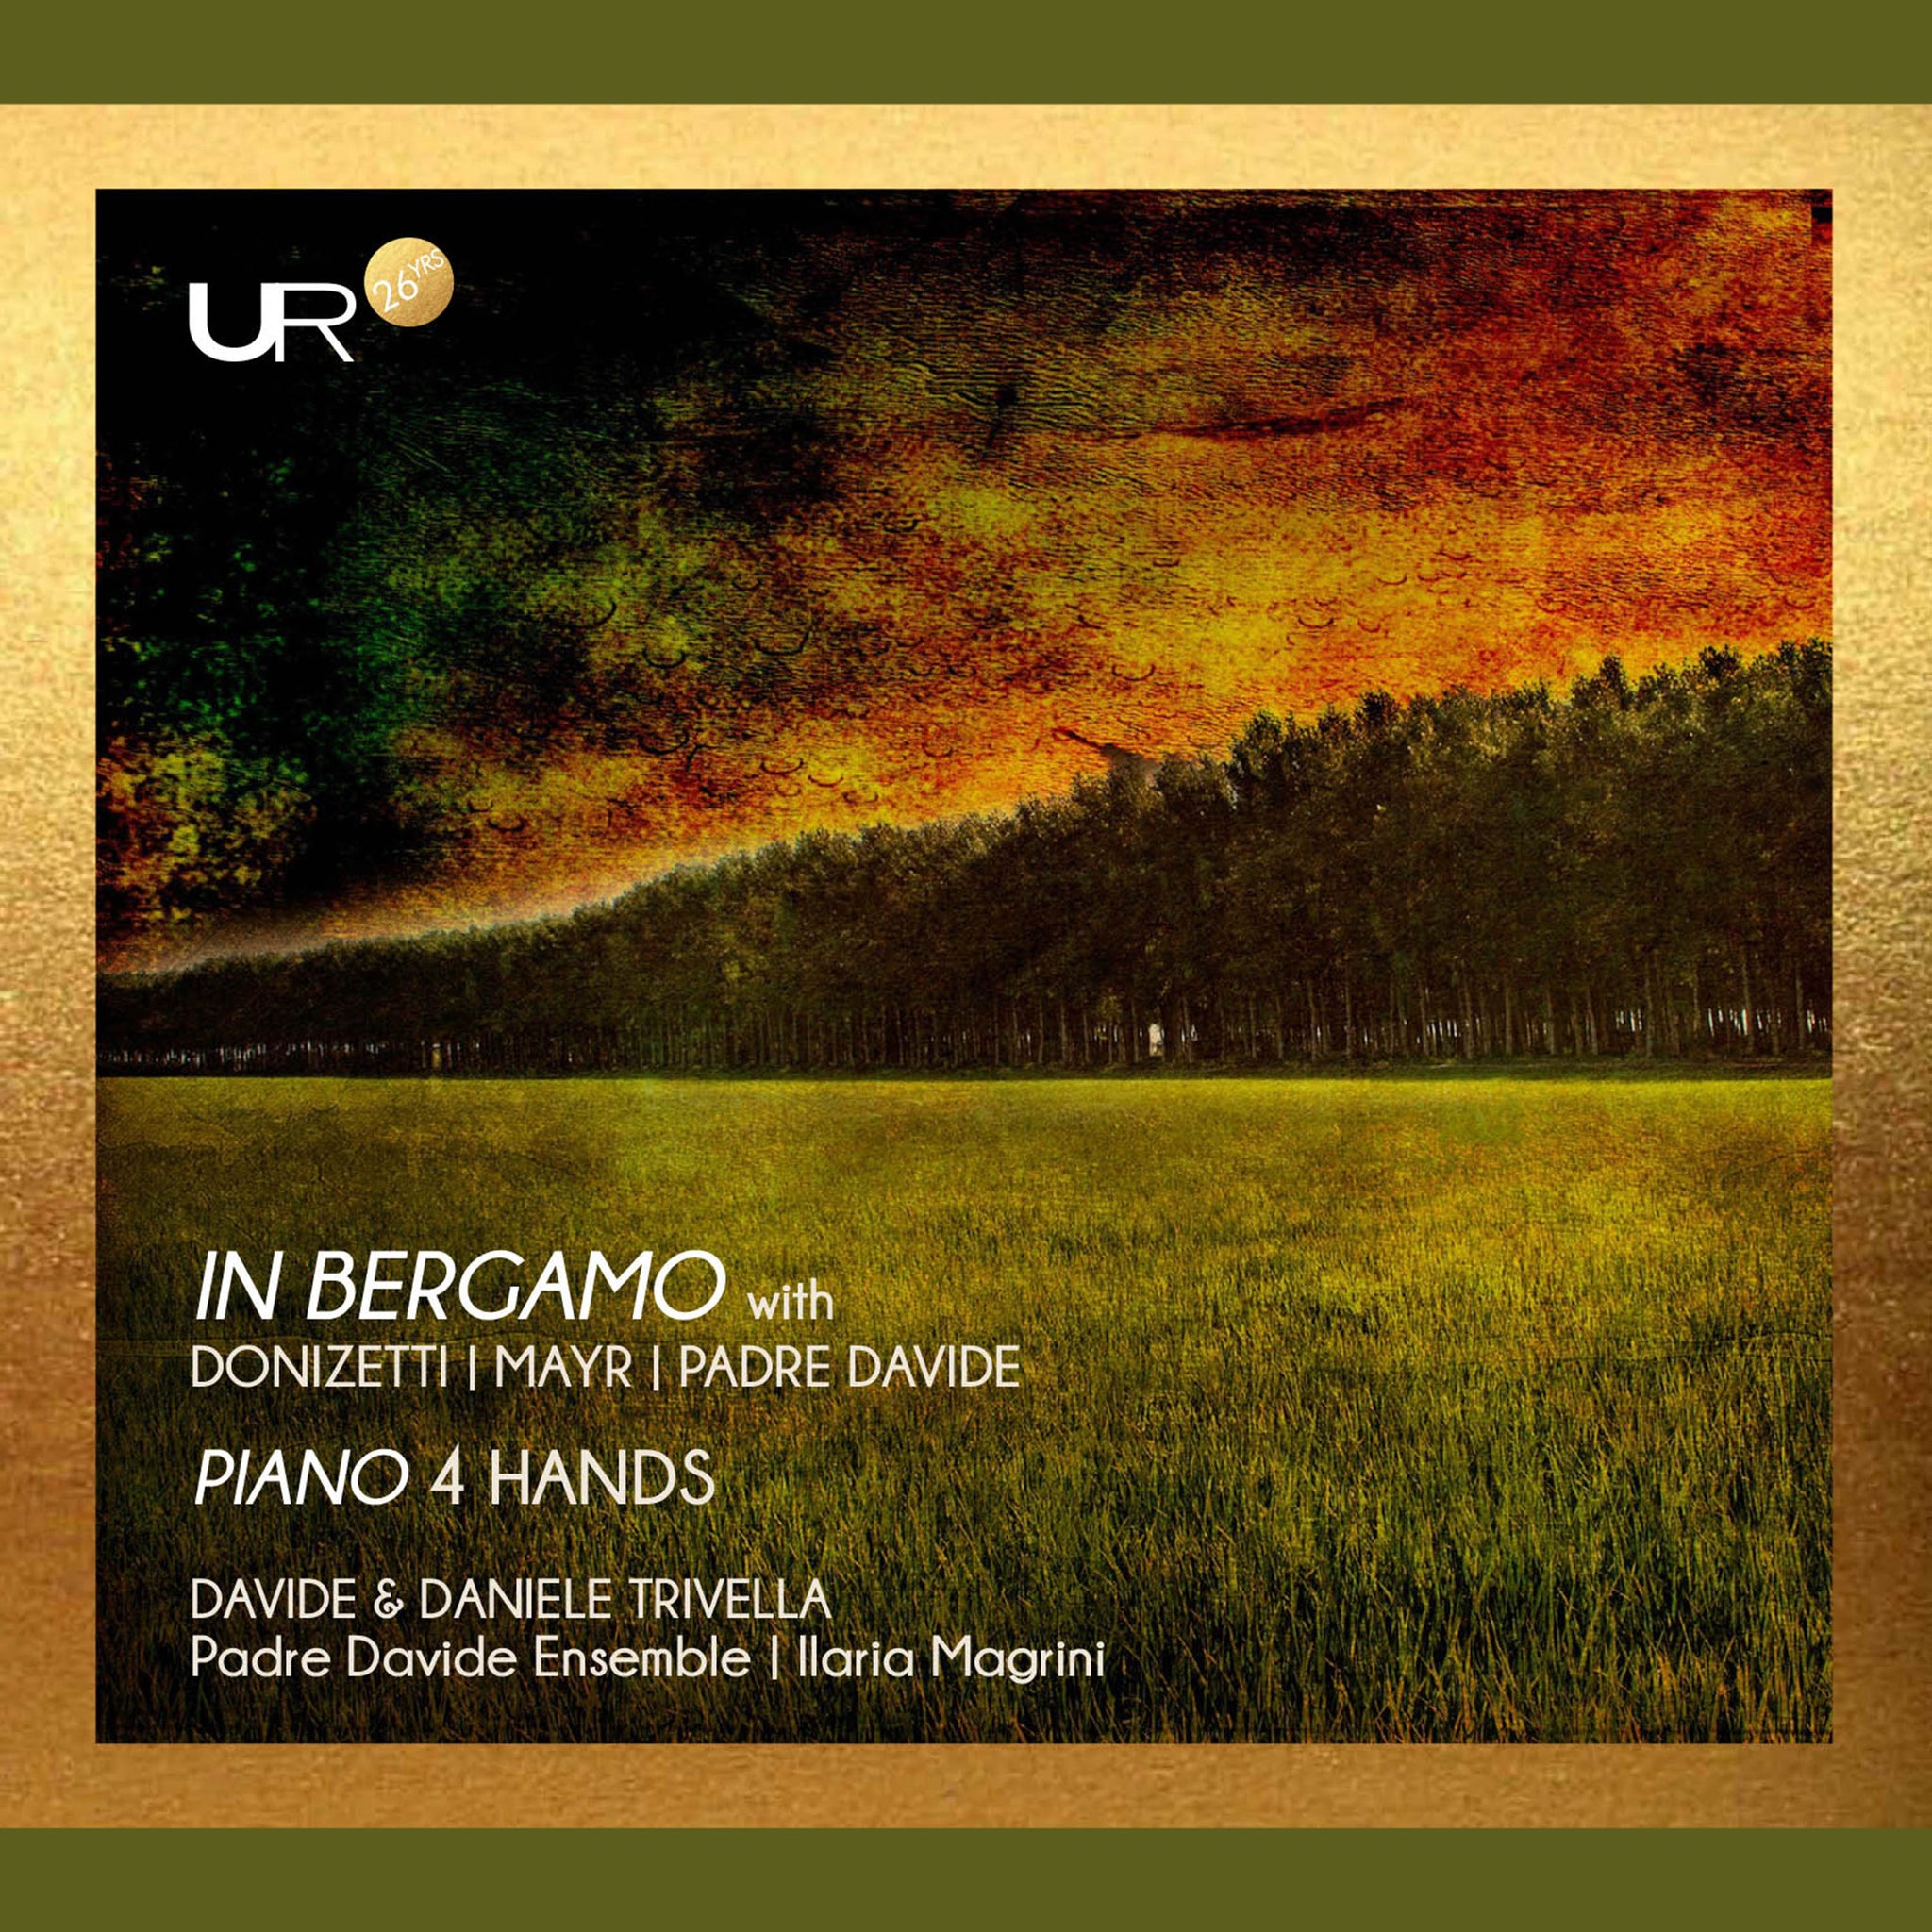 A Bergamo with Mayr, Donizetti, & Padre Davide - Piano 4 hands